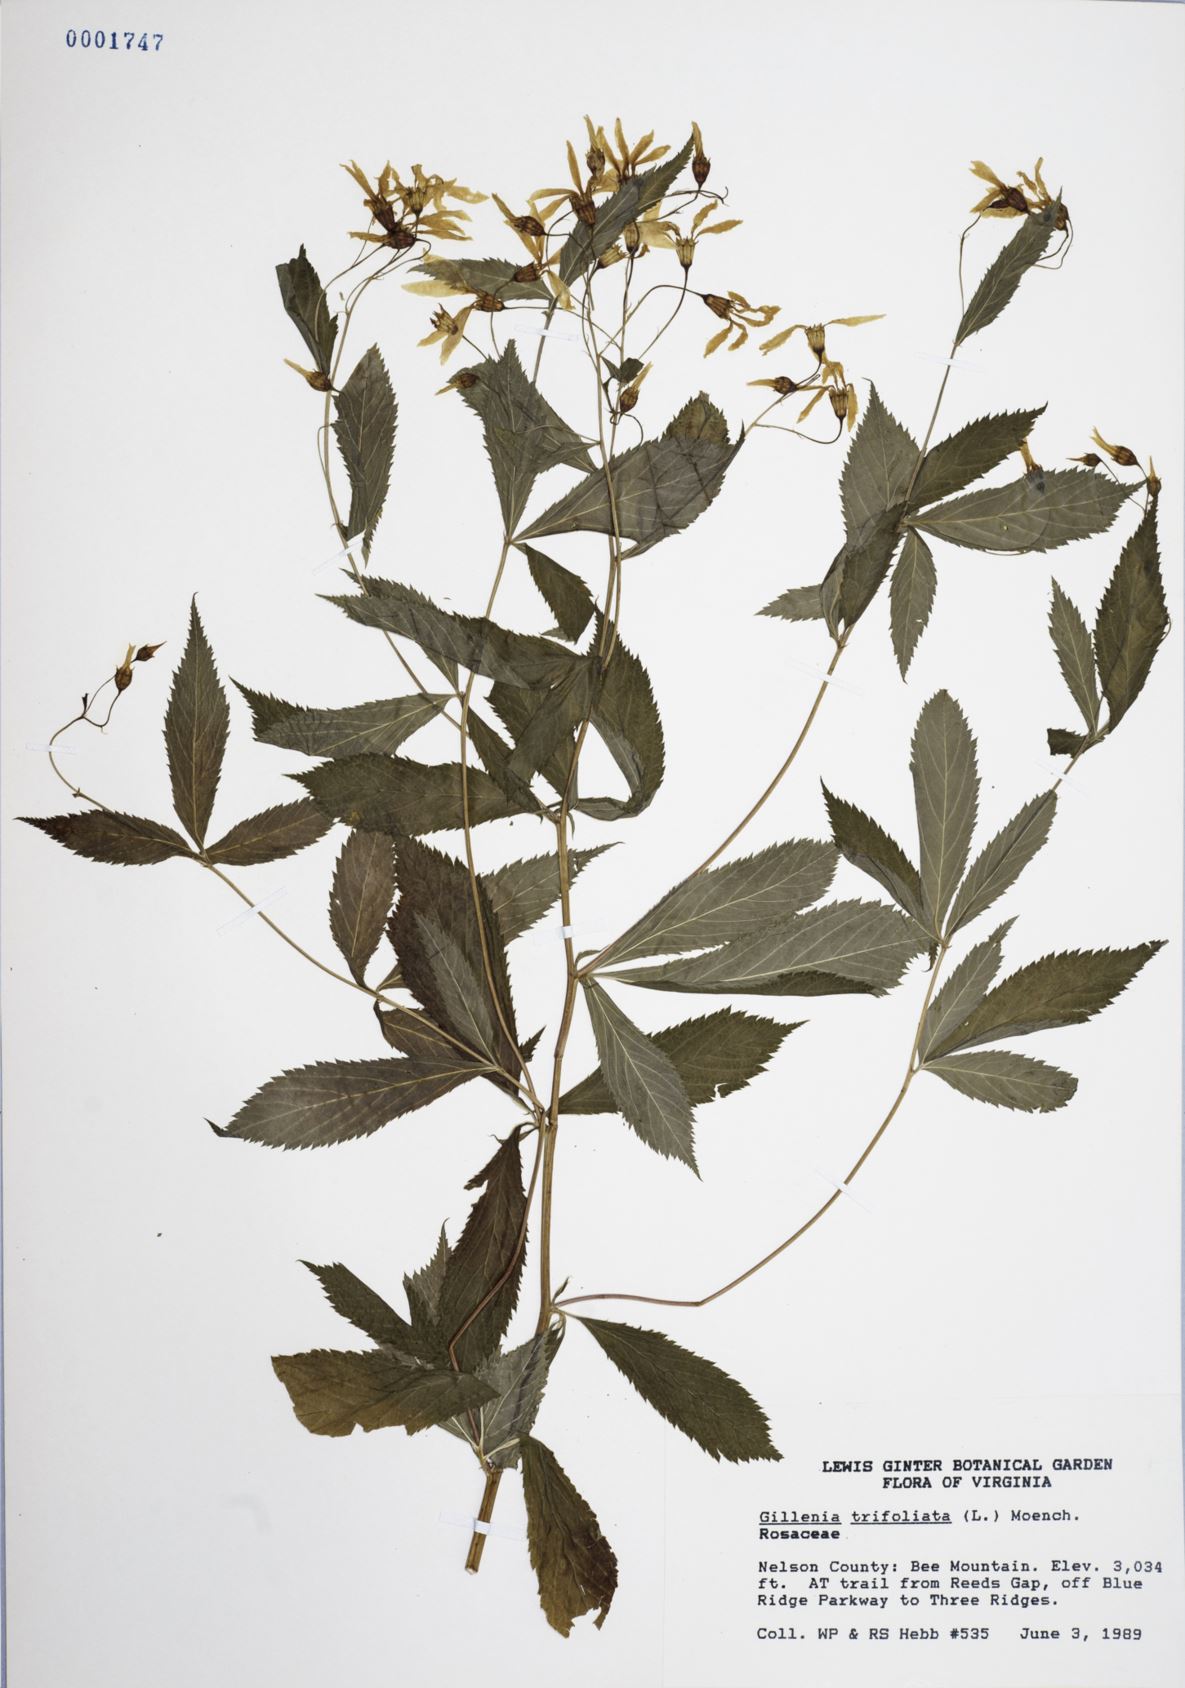 Gillenia trifoliata - bowman's root, Gillenia